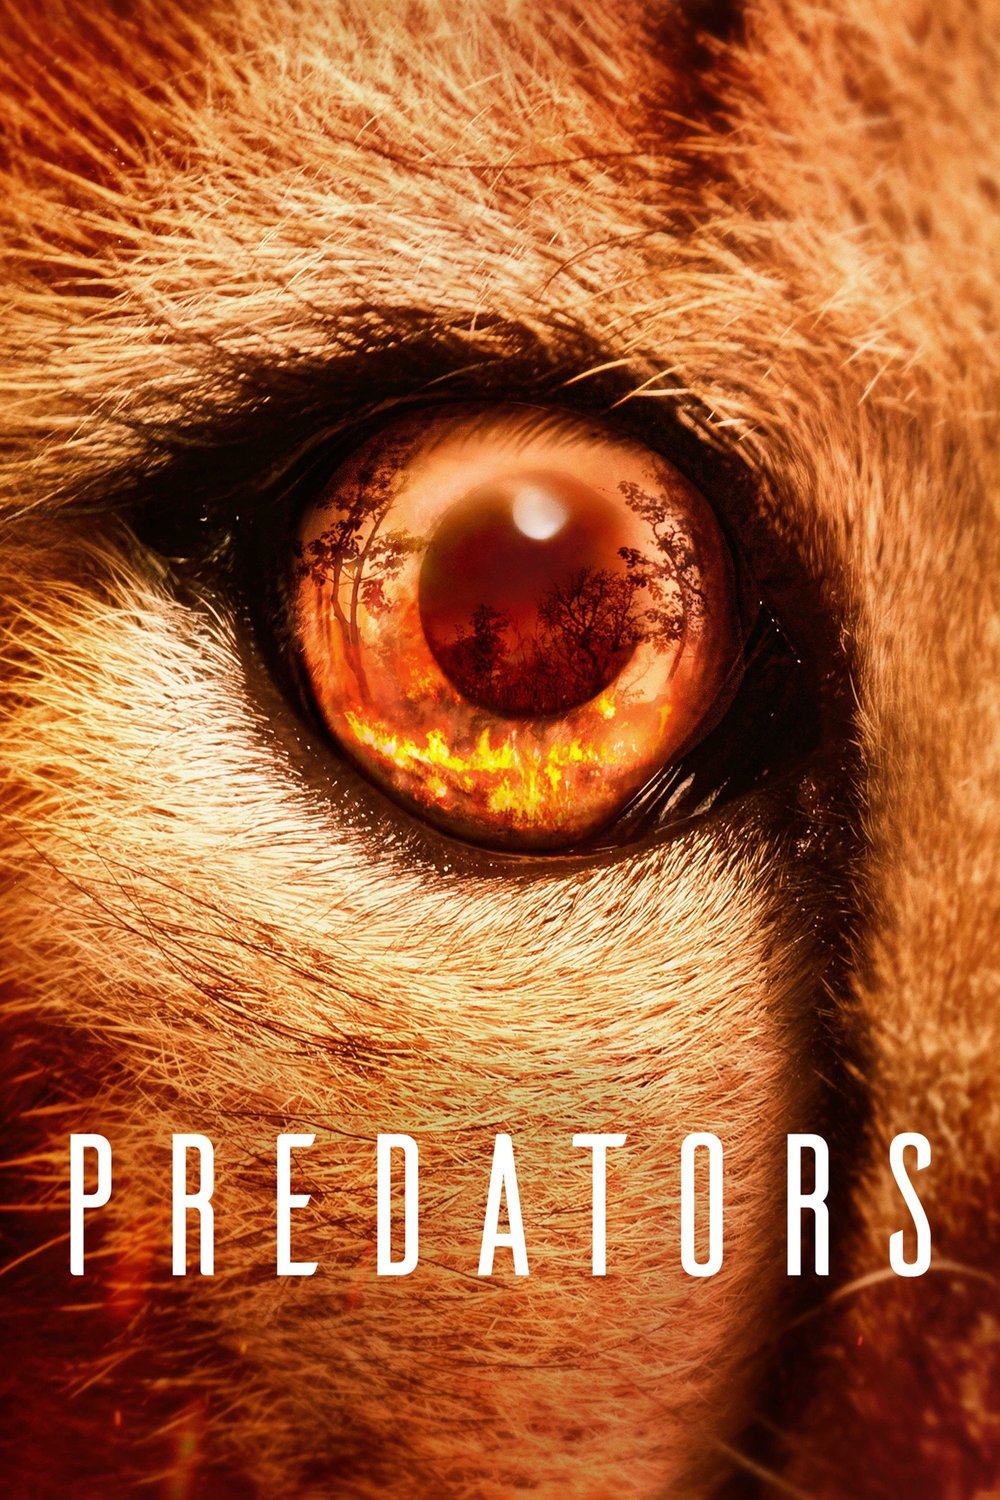 Poster of the movie Predators